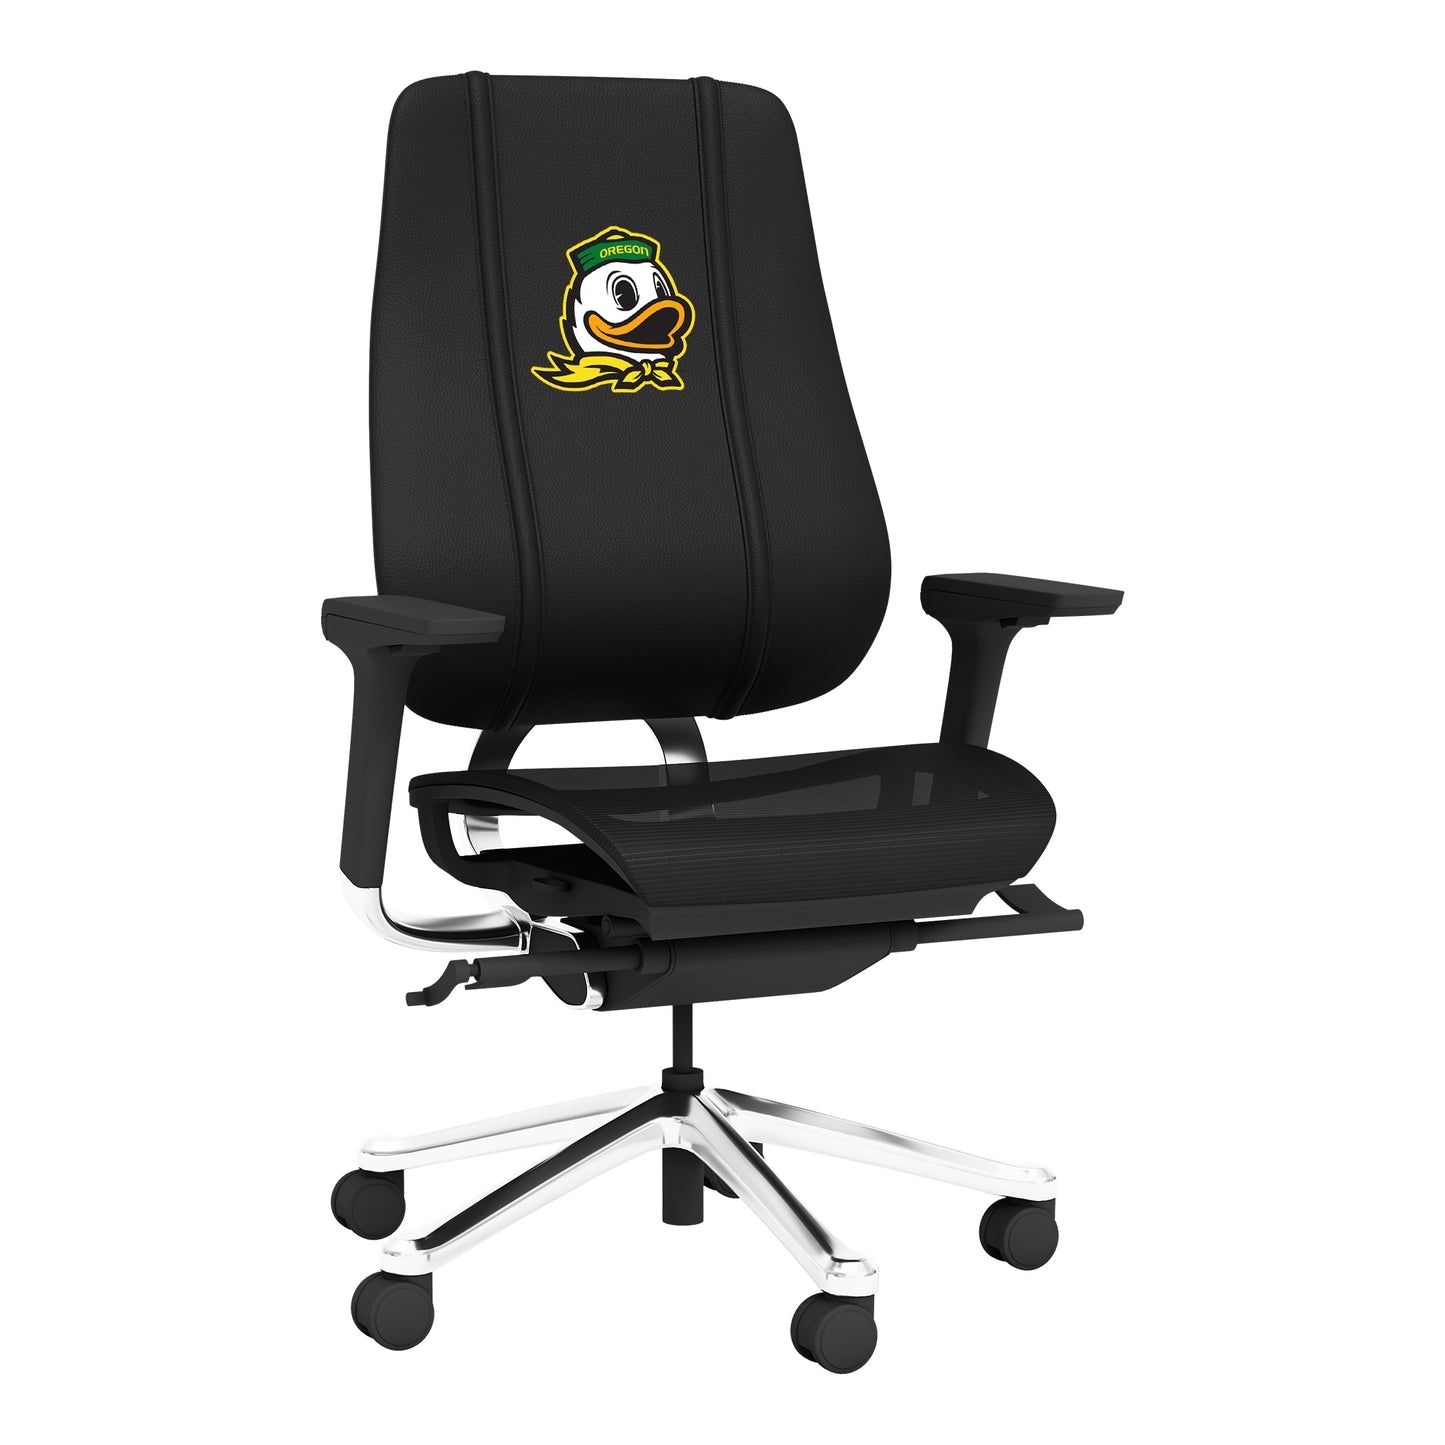 PhantomX Gaming Chair with Oregon Ducks Mascot Logo